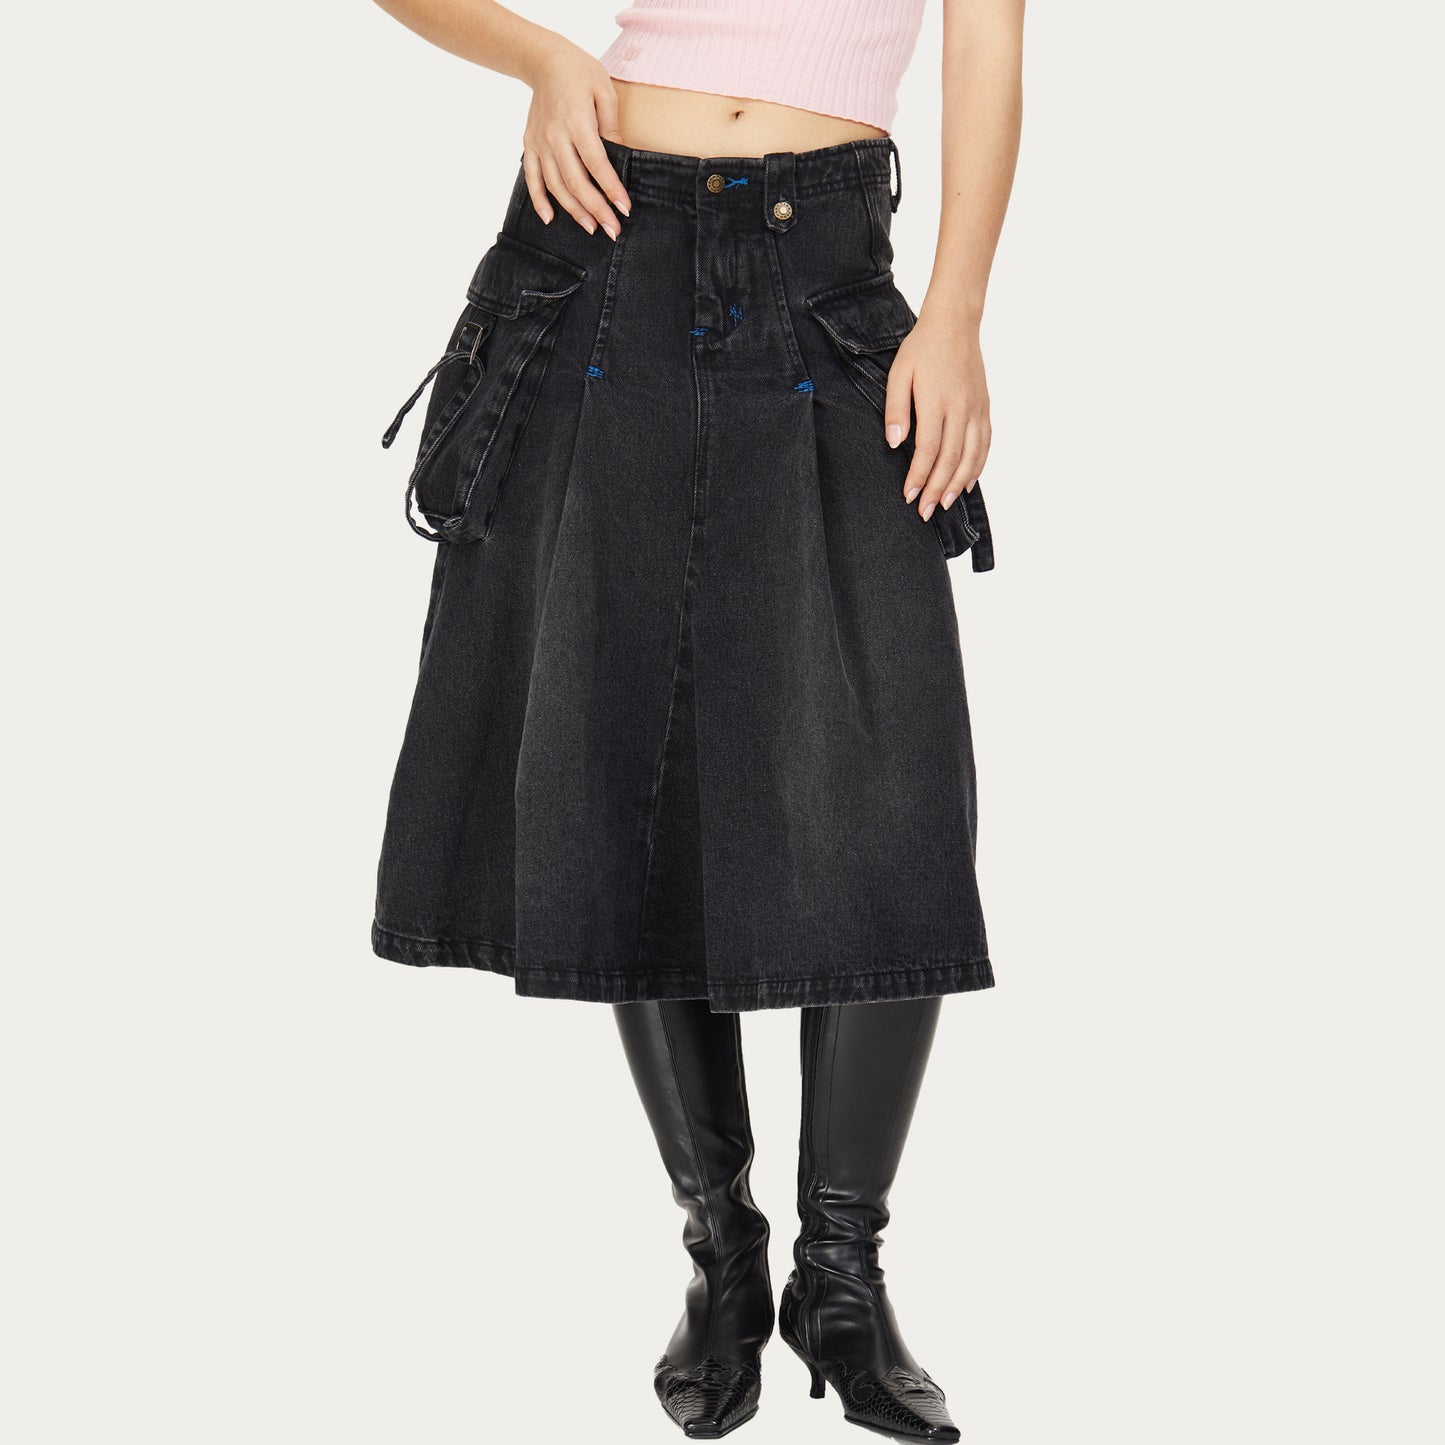 Opal Denim low-rise skirt in Black